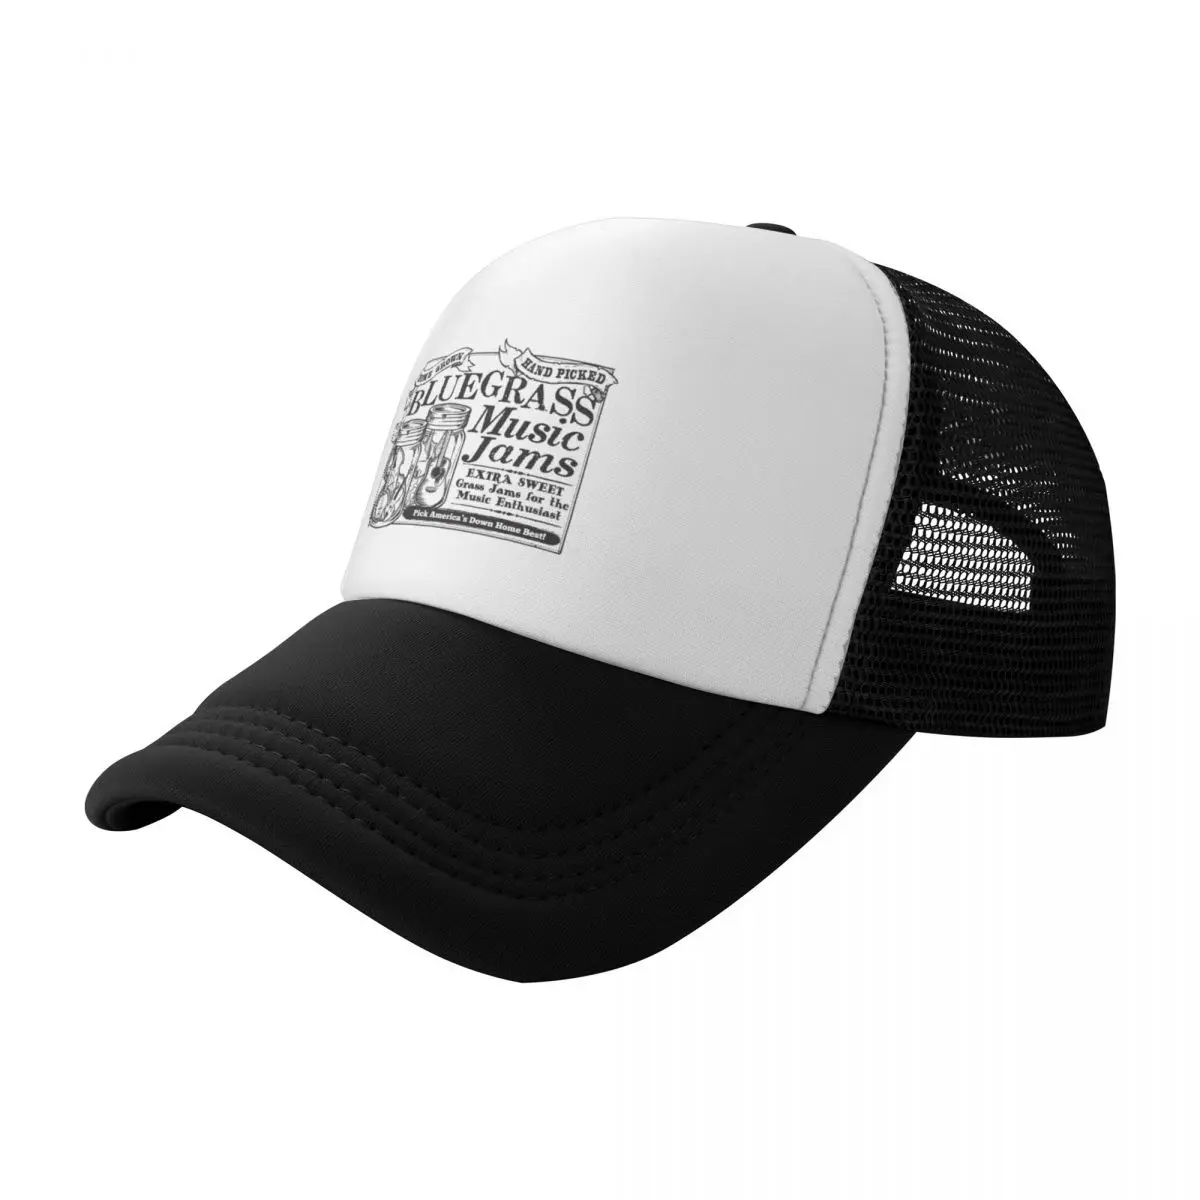 

Bluegrass Music Jam - Home Grown - Hand Picked... Baseball Cap New Hat Gentleman Hat Fishing cap Brand Man cap For Women Men's